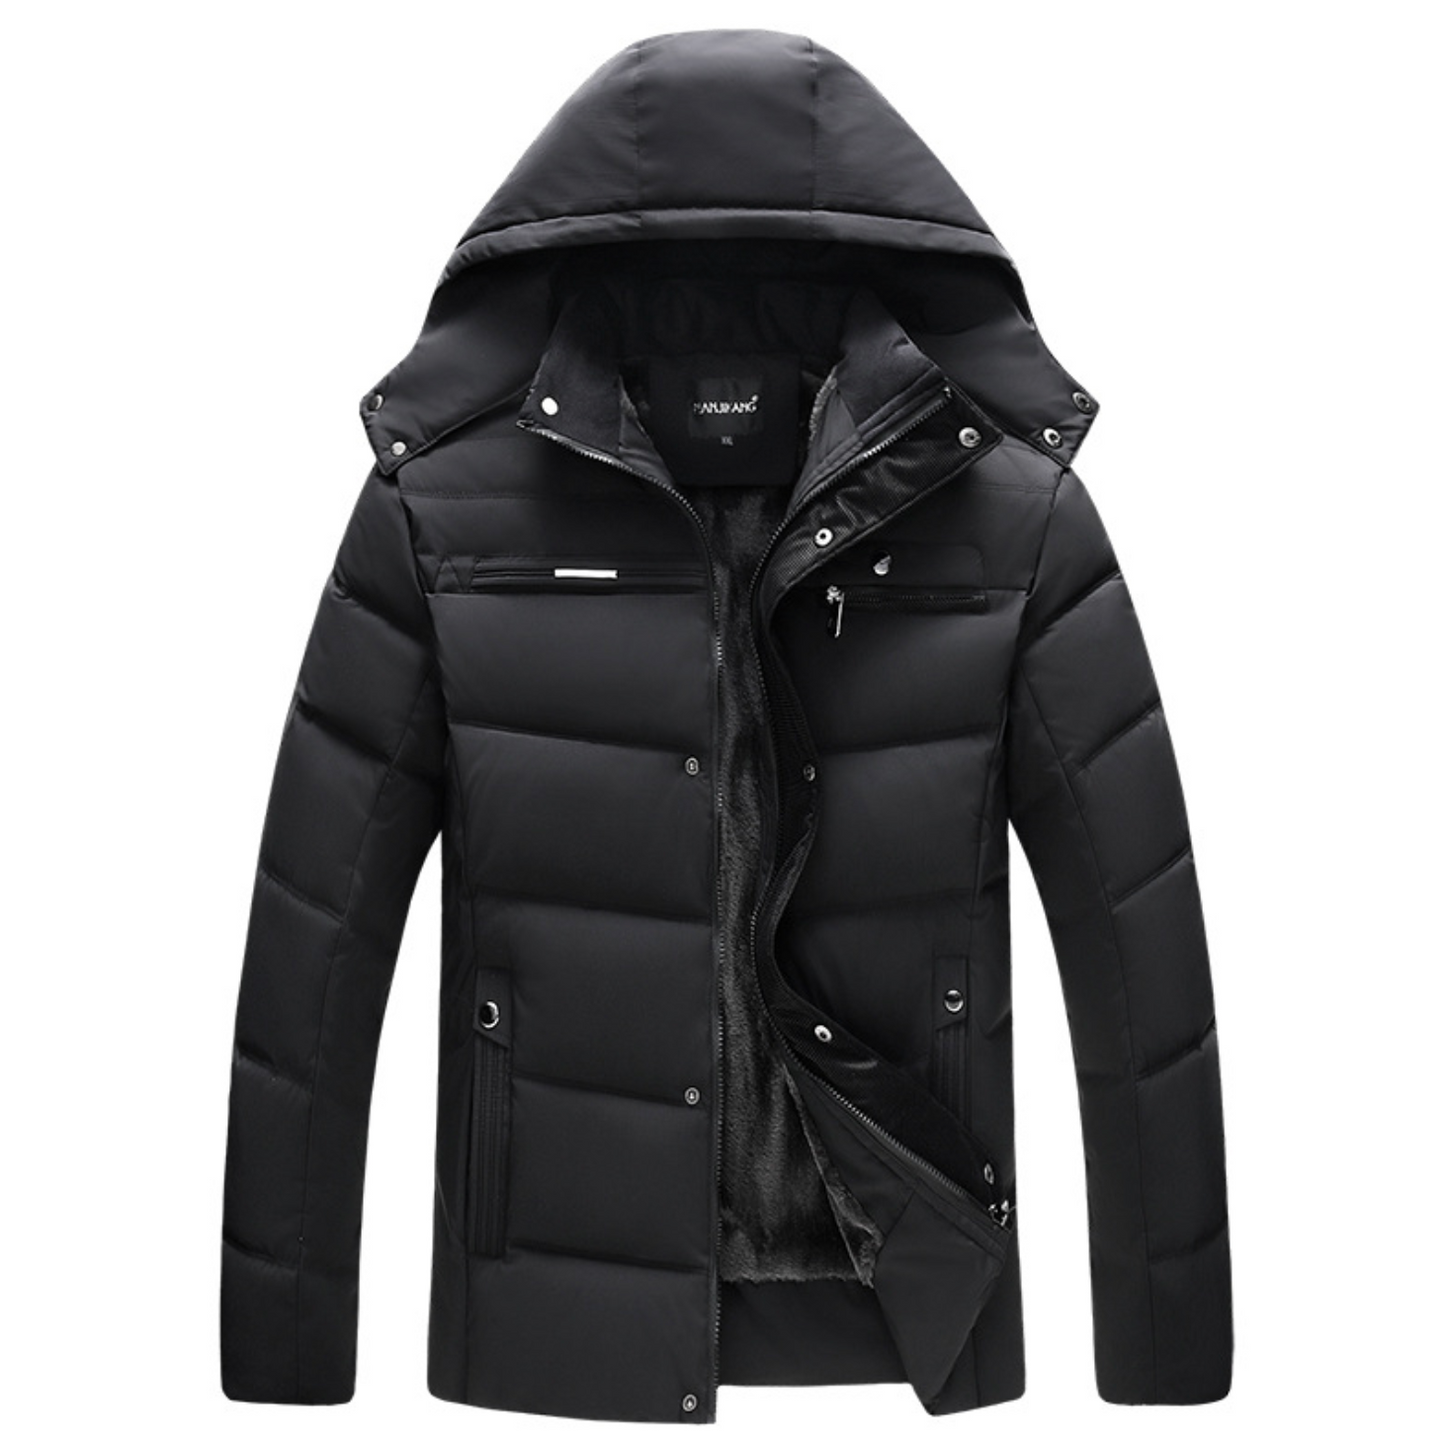 Mens Winter Zipper Coat with Detachable Hood